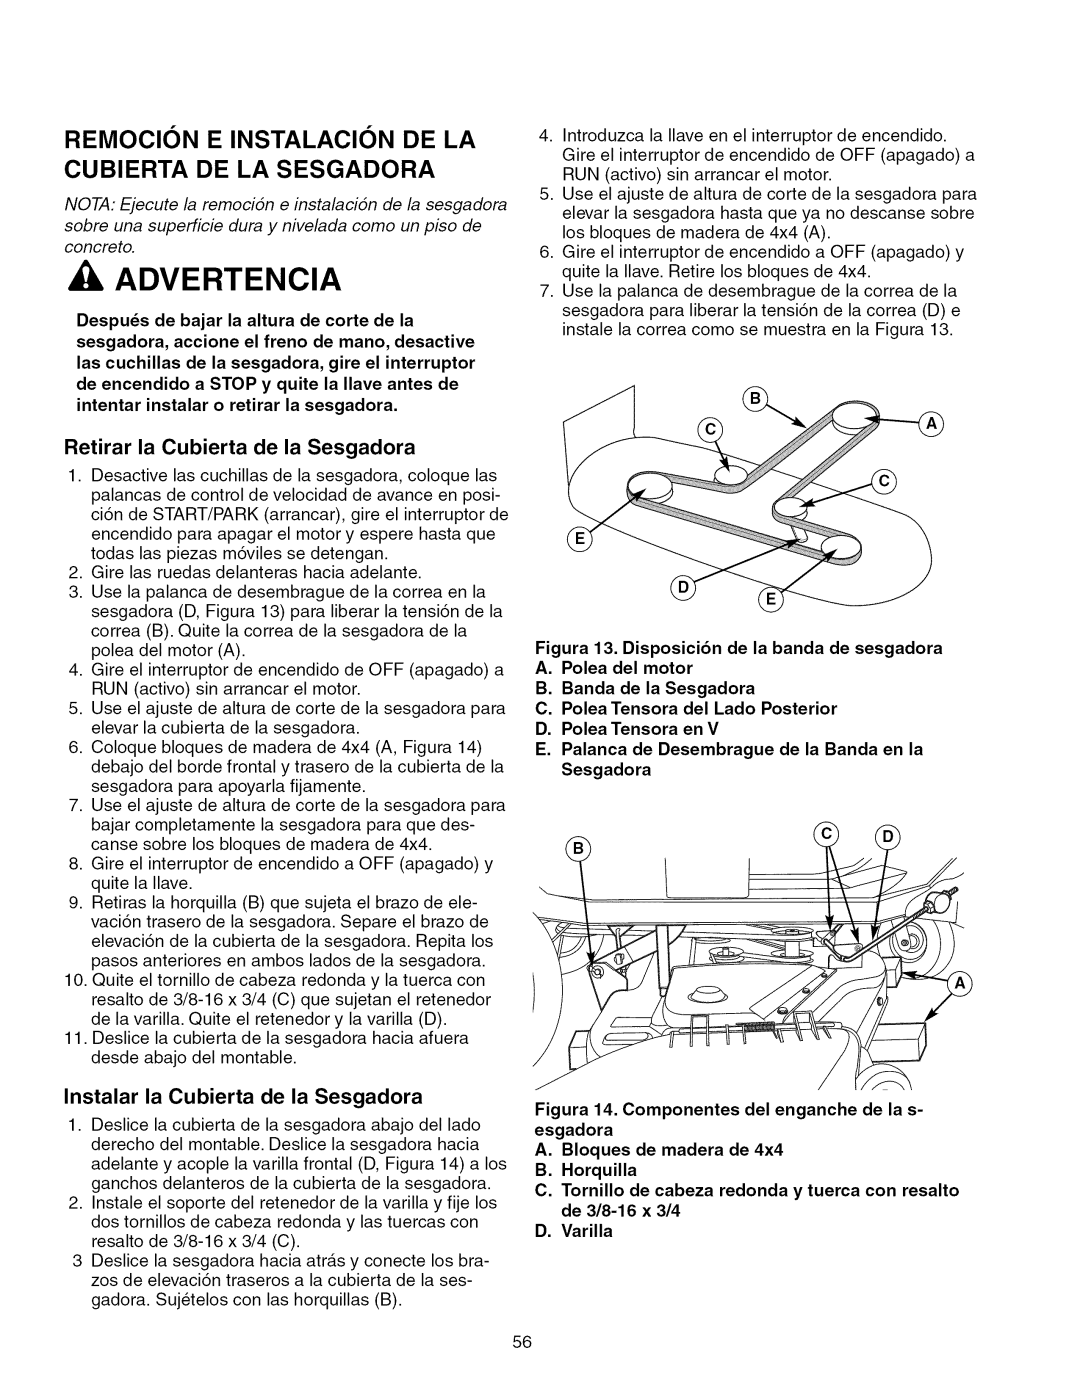 Craftsman 28986 manual Retirar la Cubierta de la Sesgadora, Instalar la Cubierta de la Sesgadora, B.Banda de la Sesgadora 